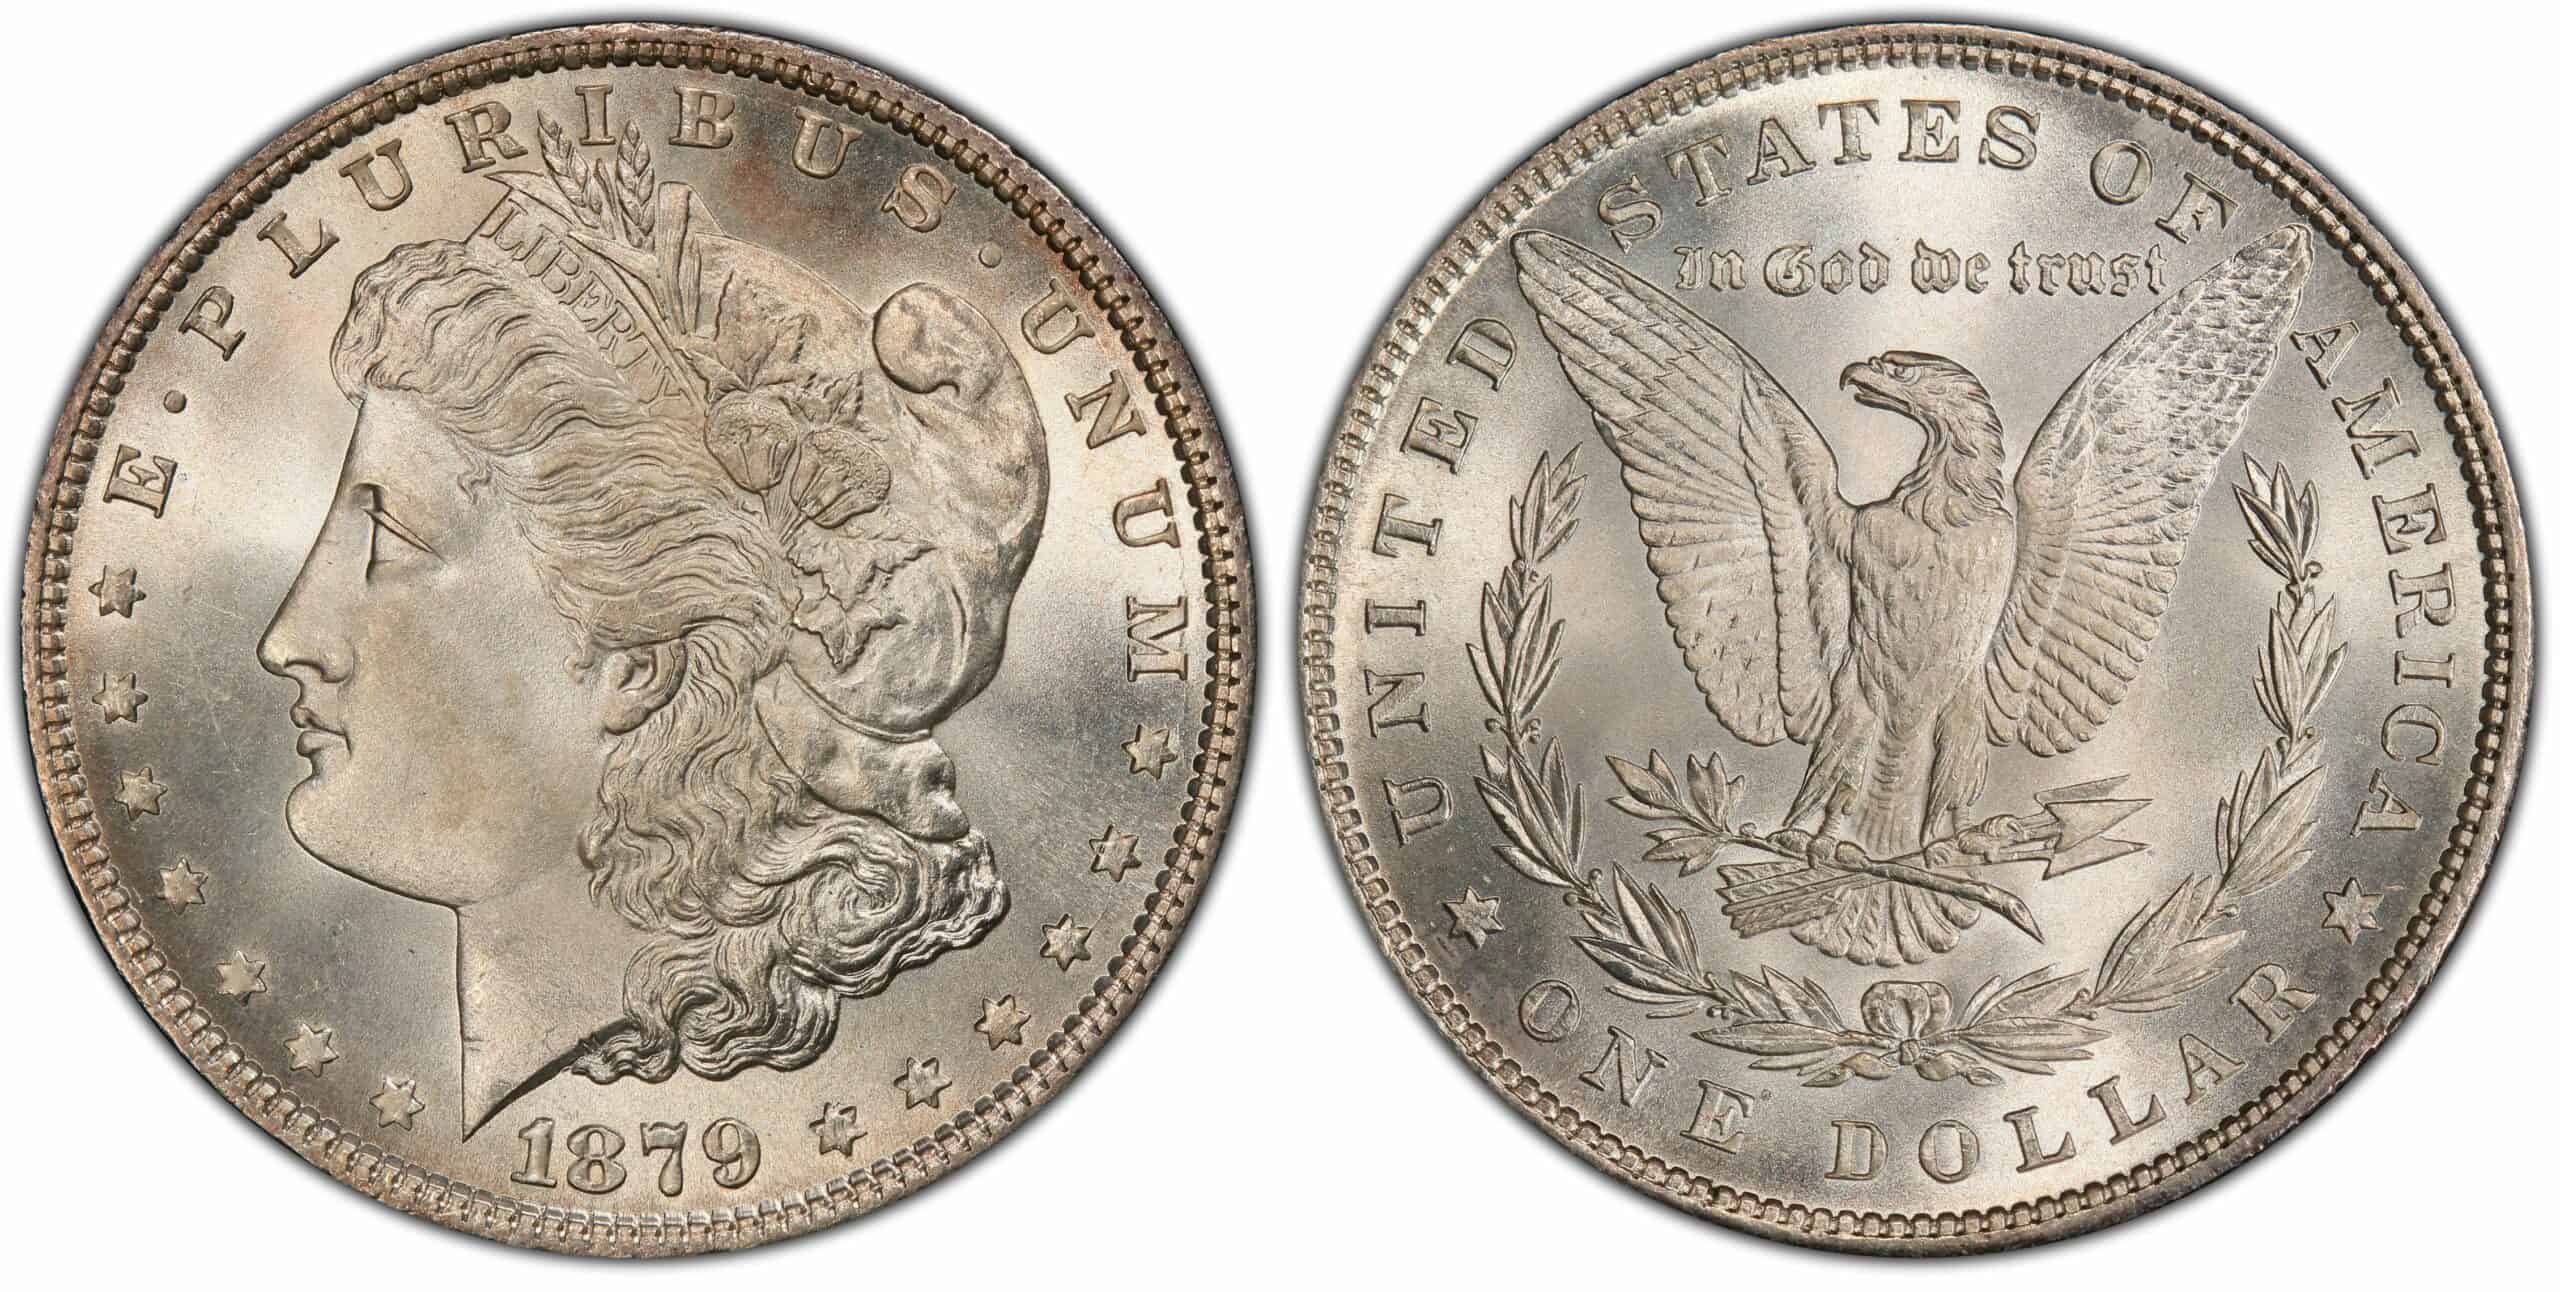 1879 Morgan Silver Dollar History